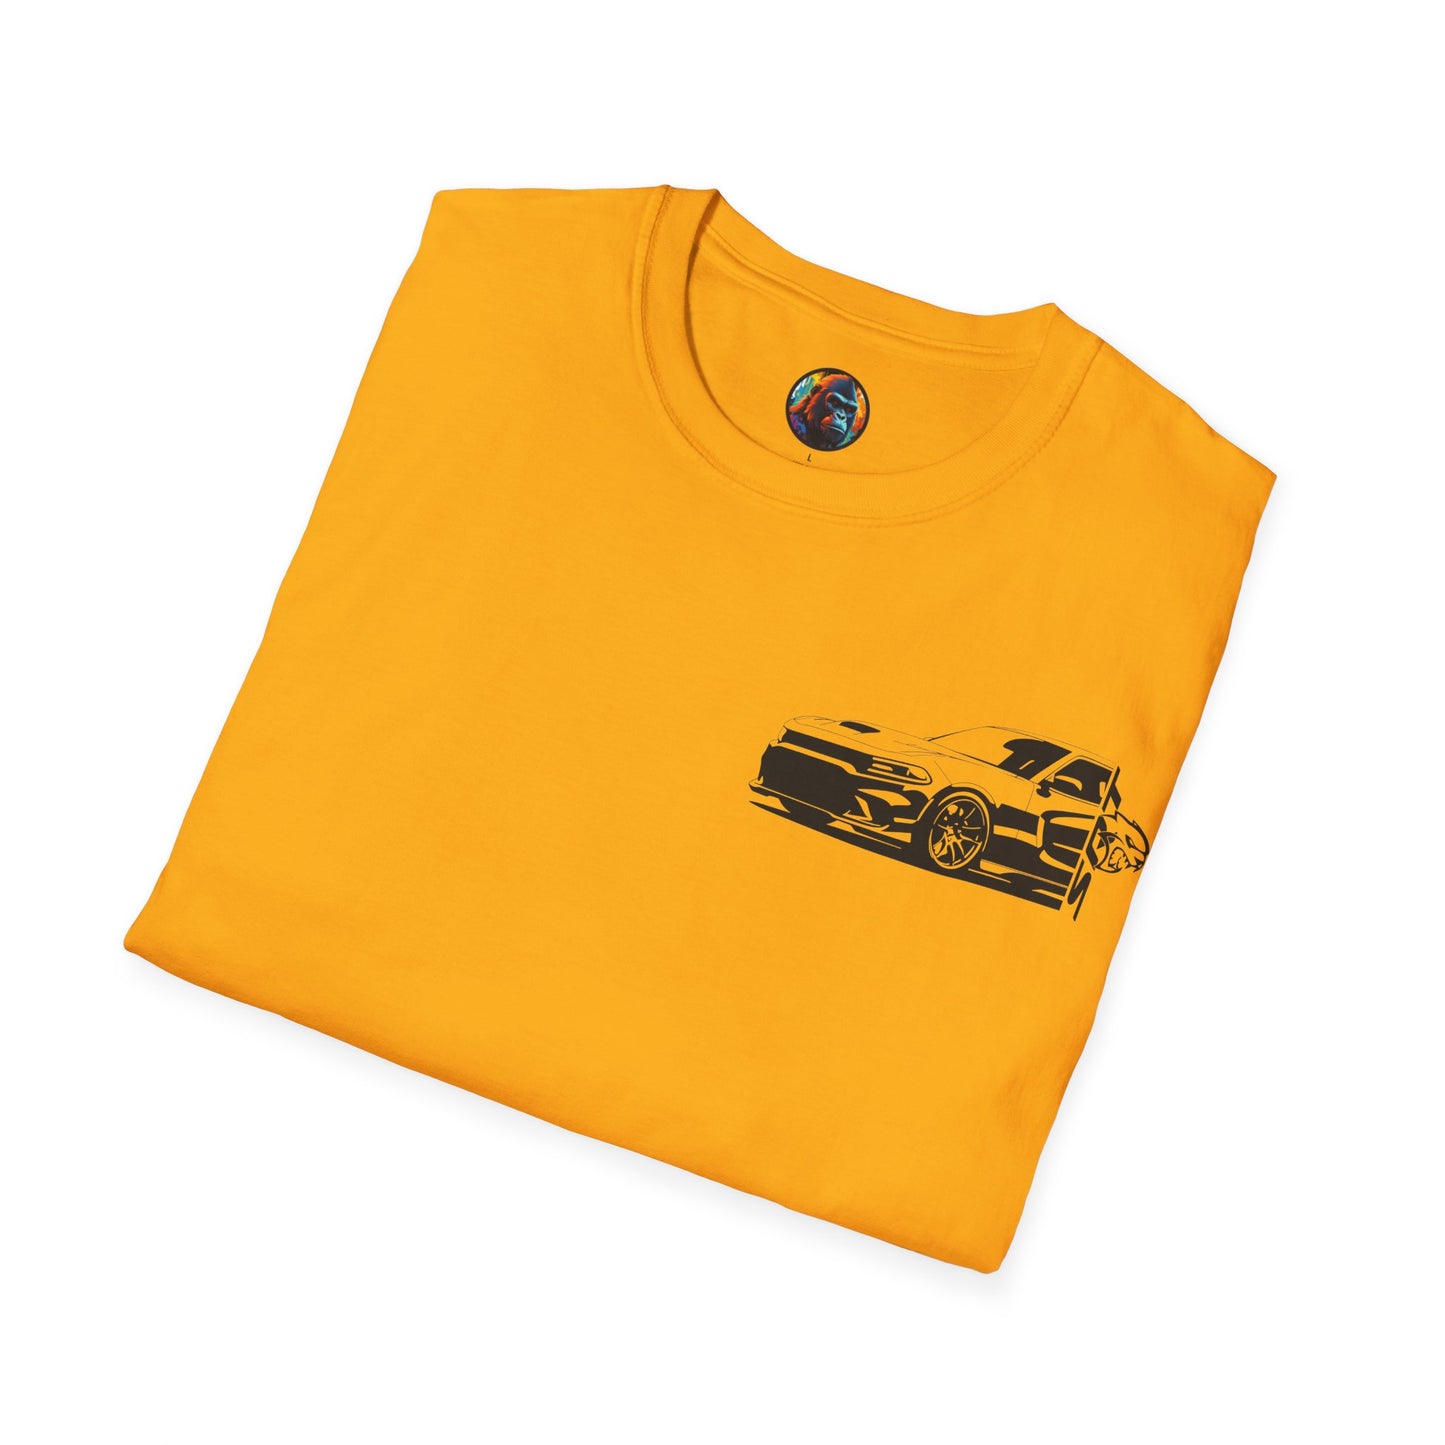 SRT Charger Hellcat Silhouette T-Shirt